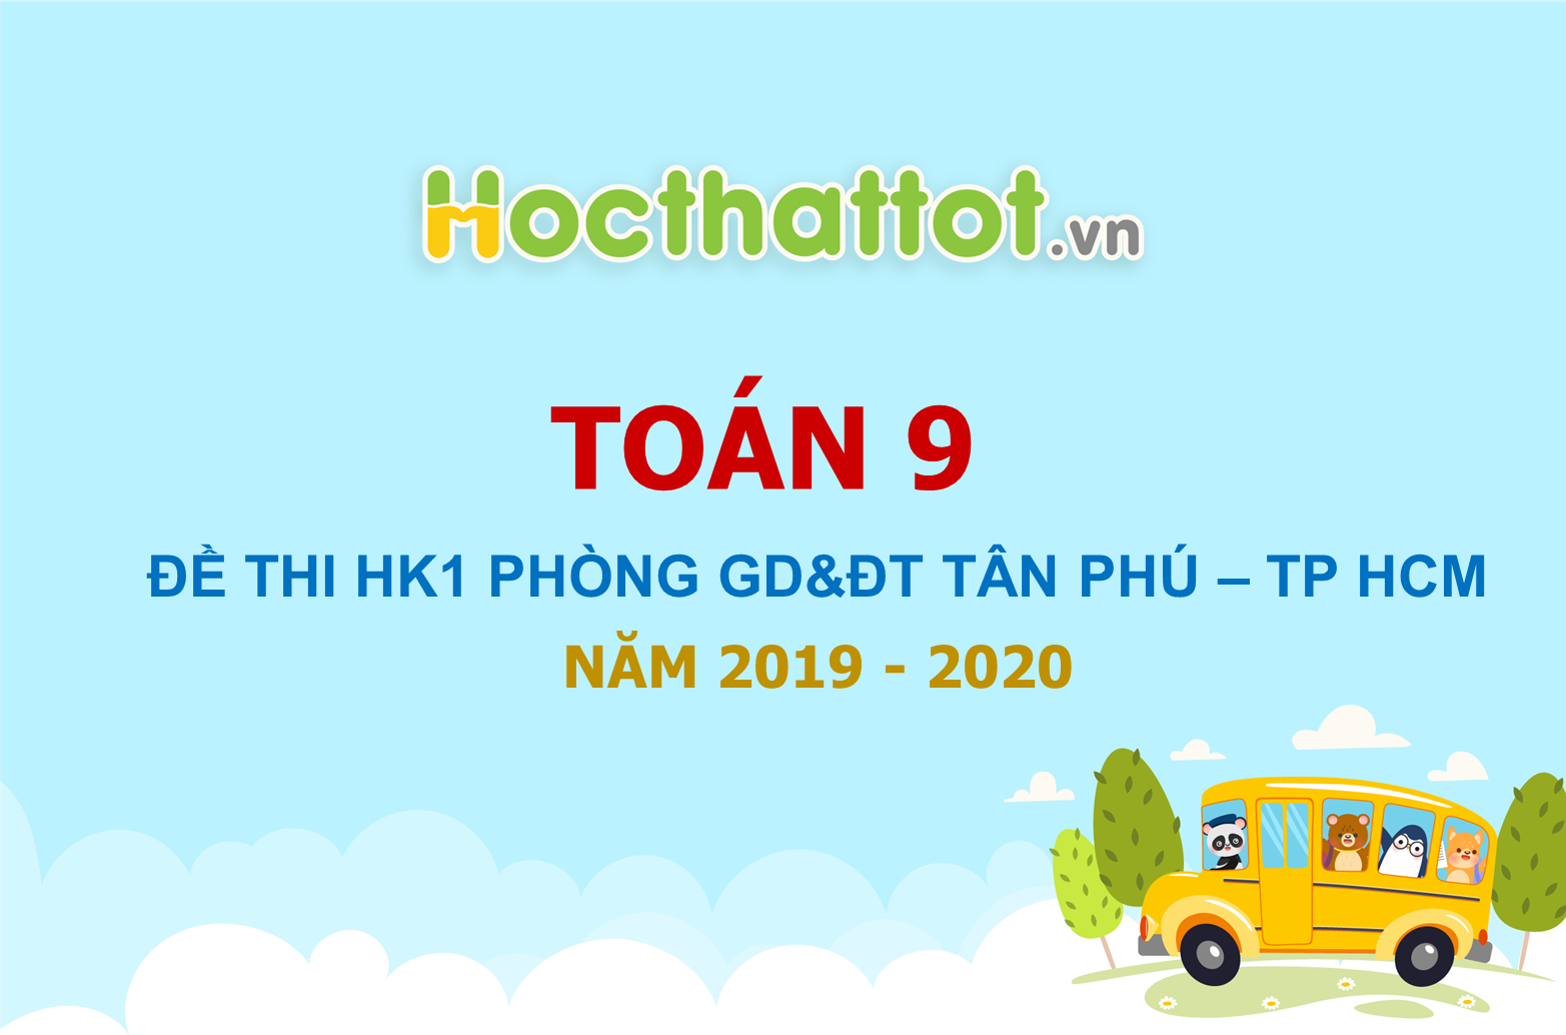 de-thi-hk1-toan-9-nam-hoc-2019-2020-phong-gddt-tan-phu-tp-hcm